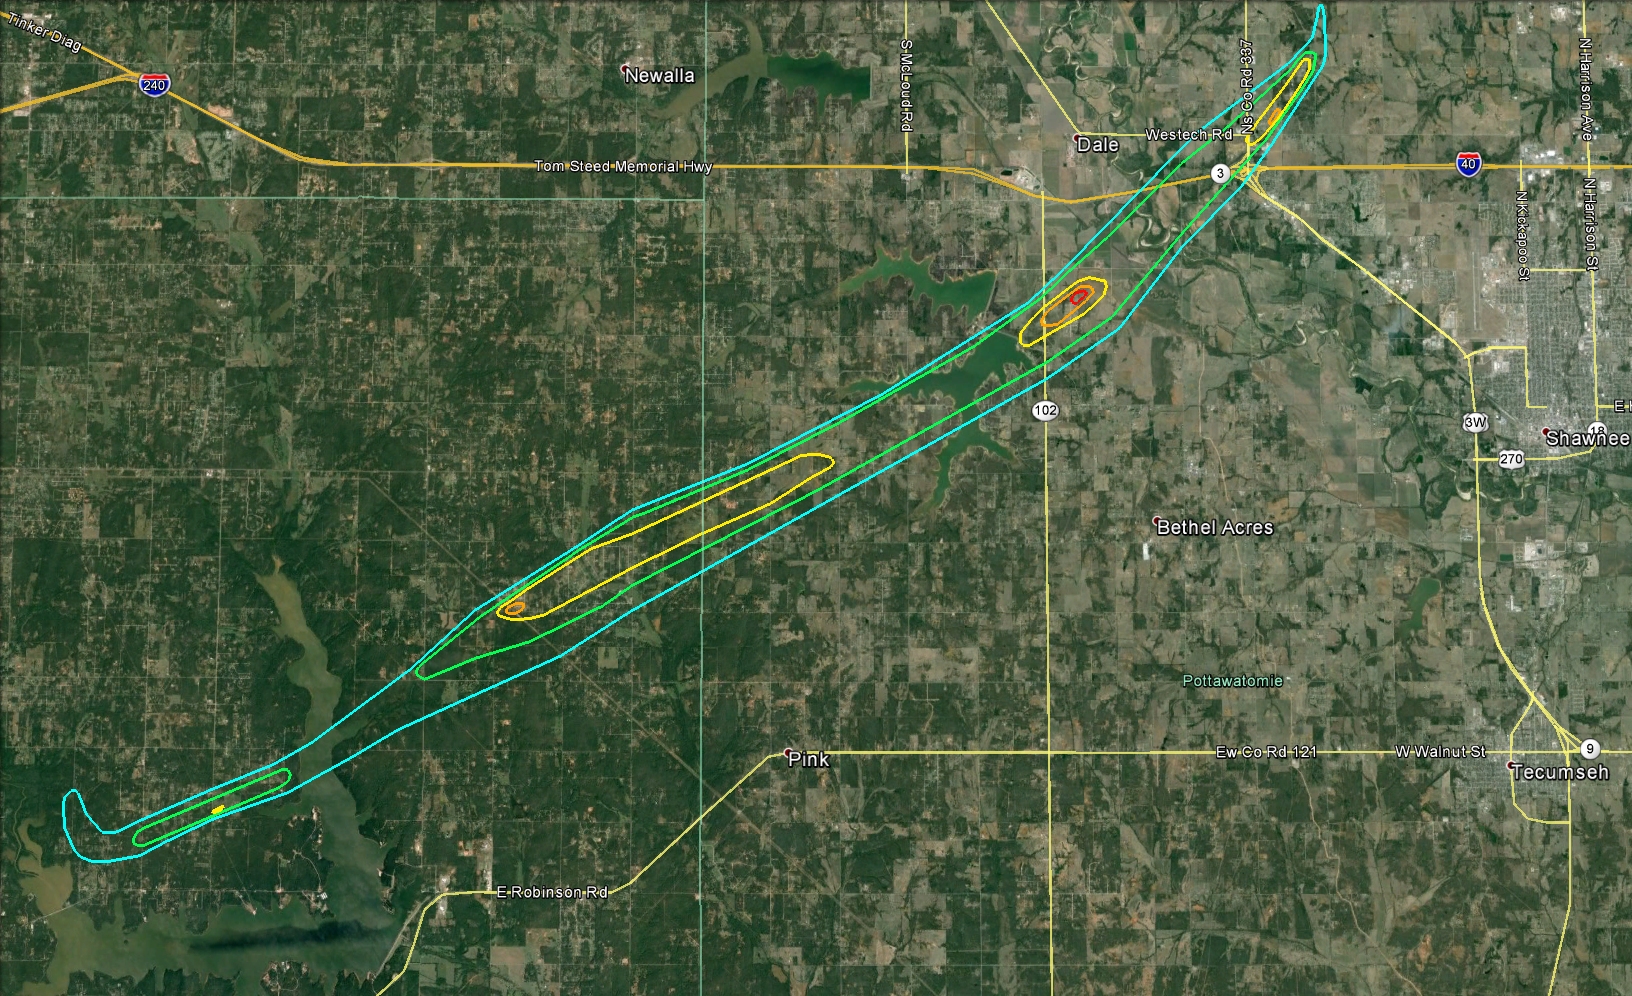 EF Scale Damage Contours of the May 19, 2013 Lake Thunderbird-Shawnee, OK Tornado